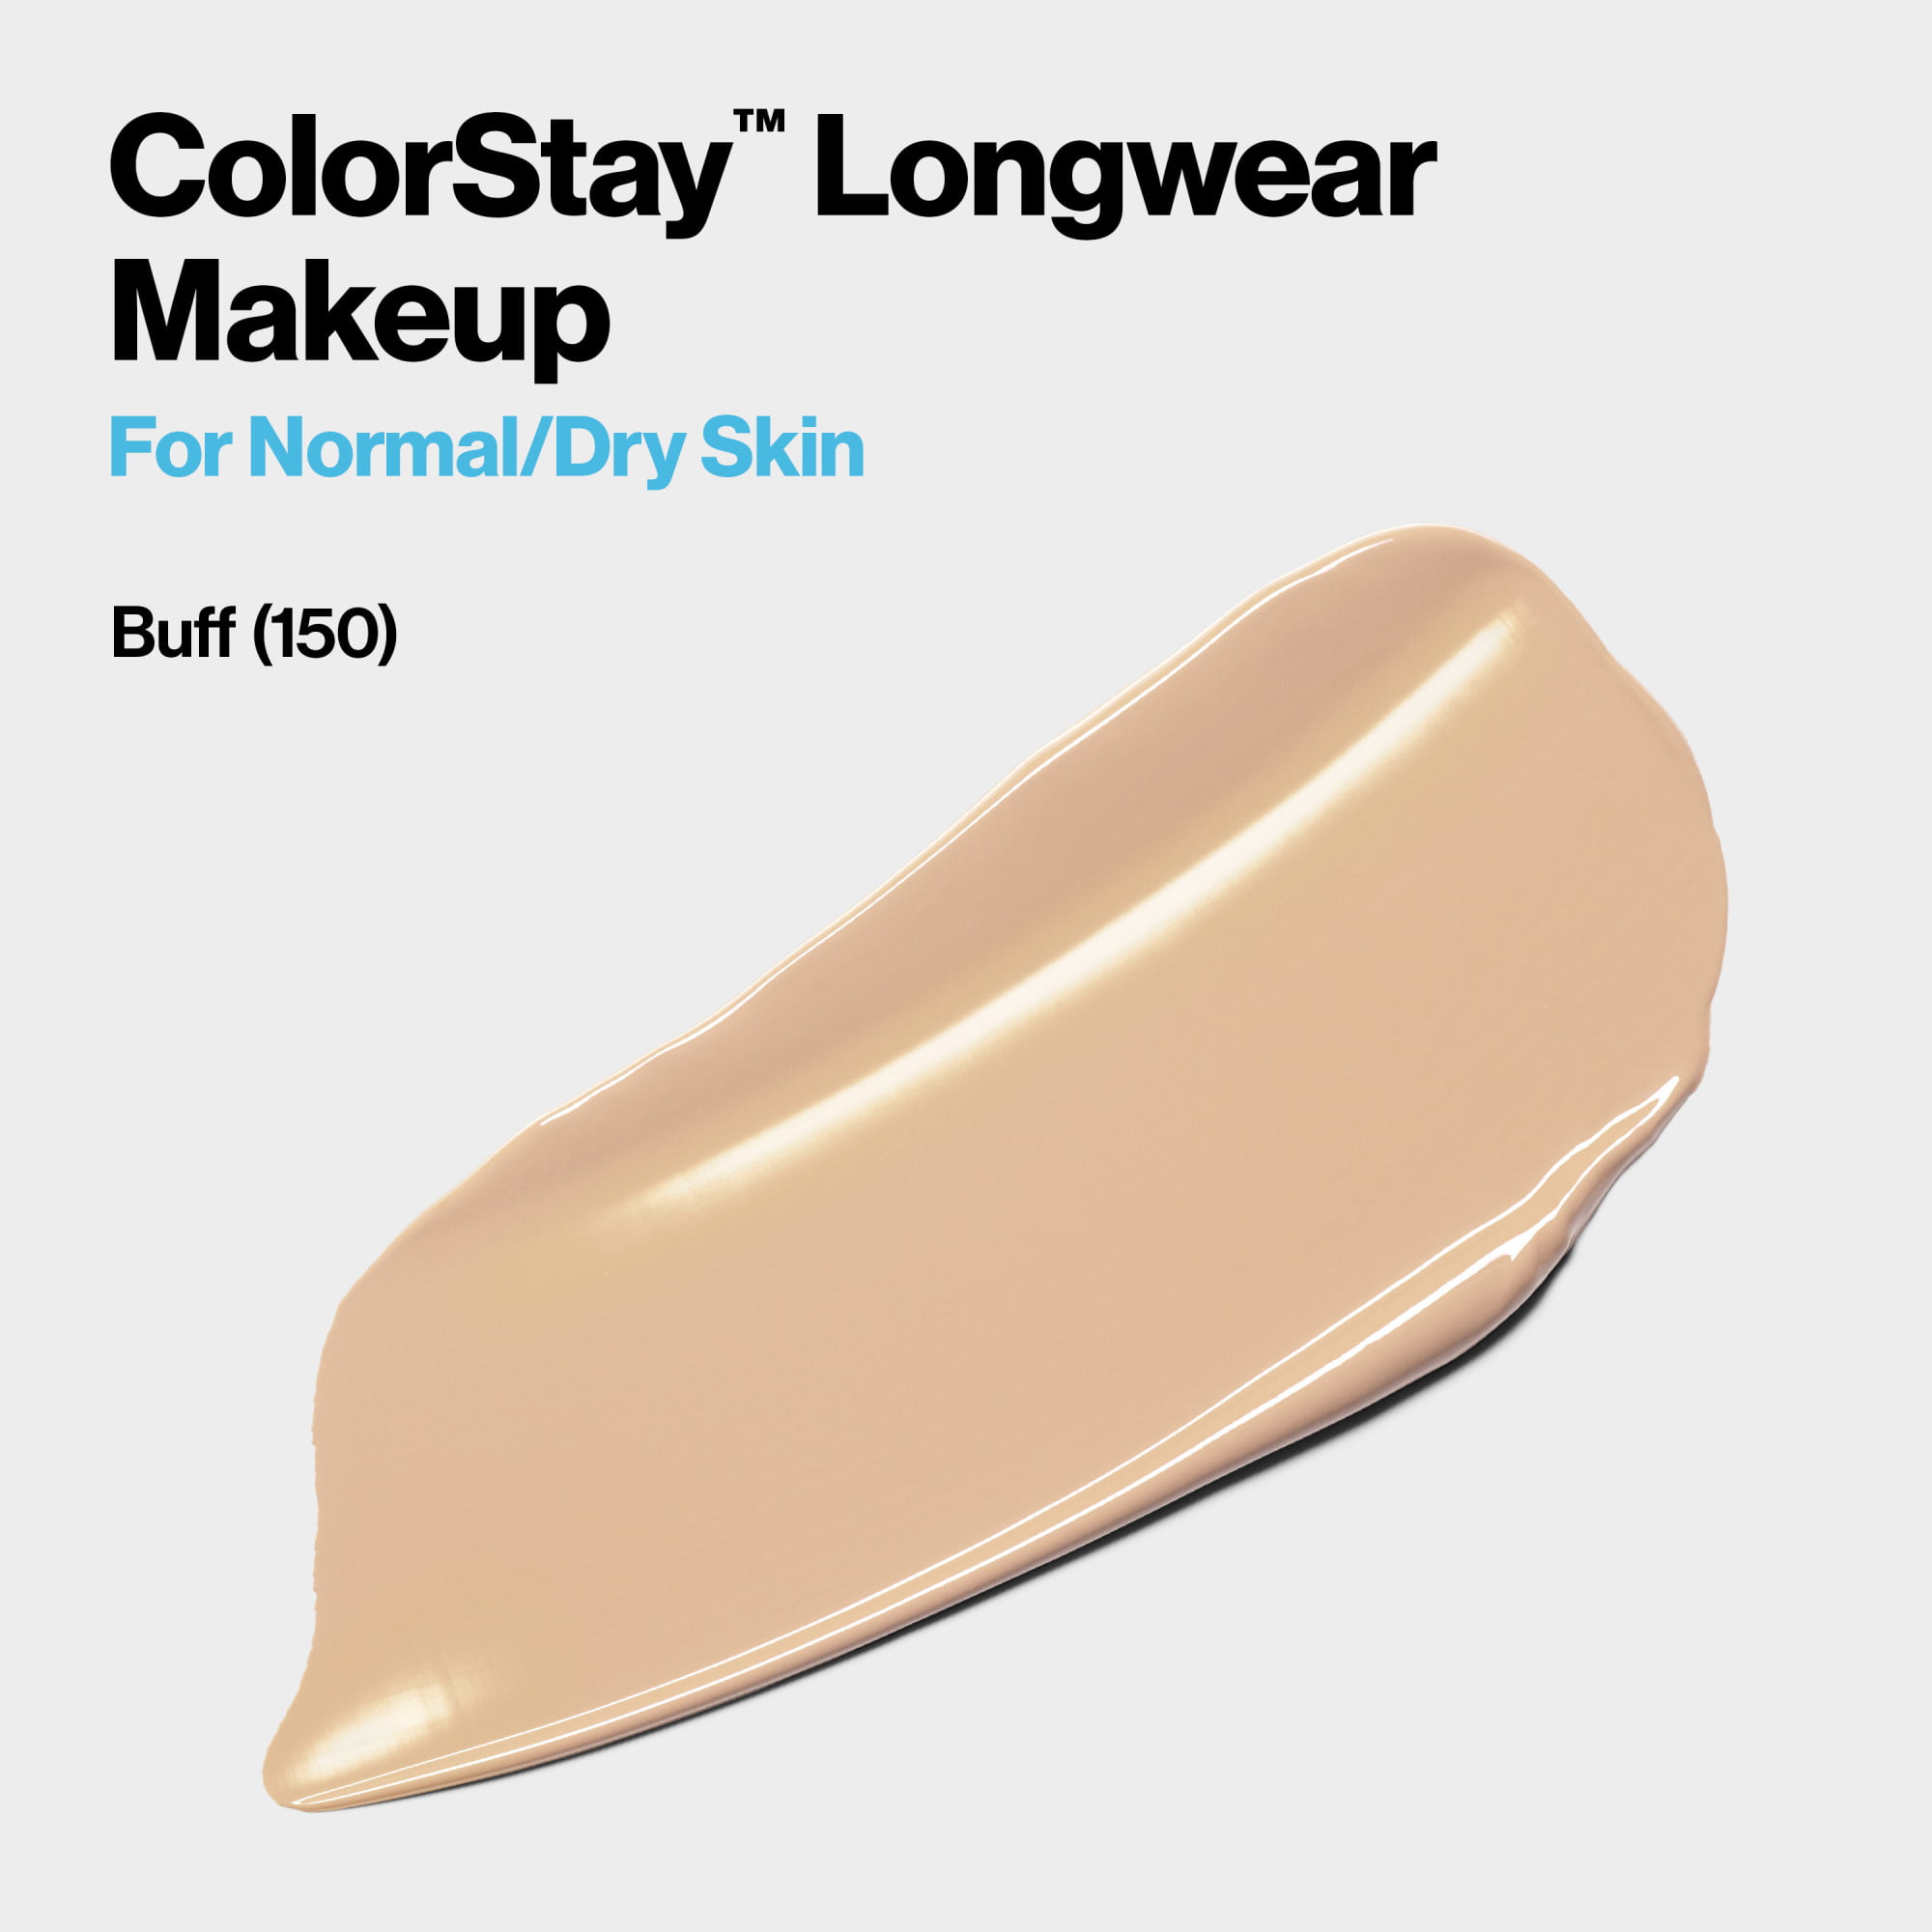 Revlon ColorStay Liquid Foundation Makeup, Normal/Dry Skin, SPF 20, 150 Buff, 1 fl oz - image 3 of 12